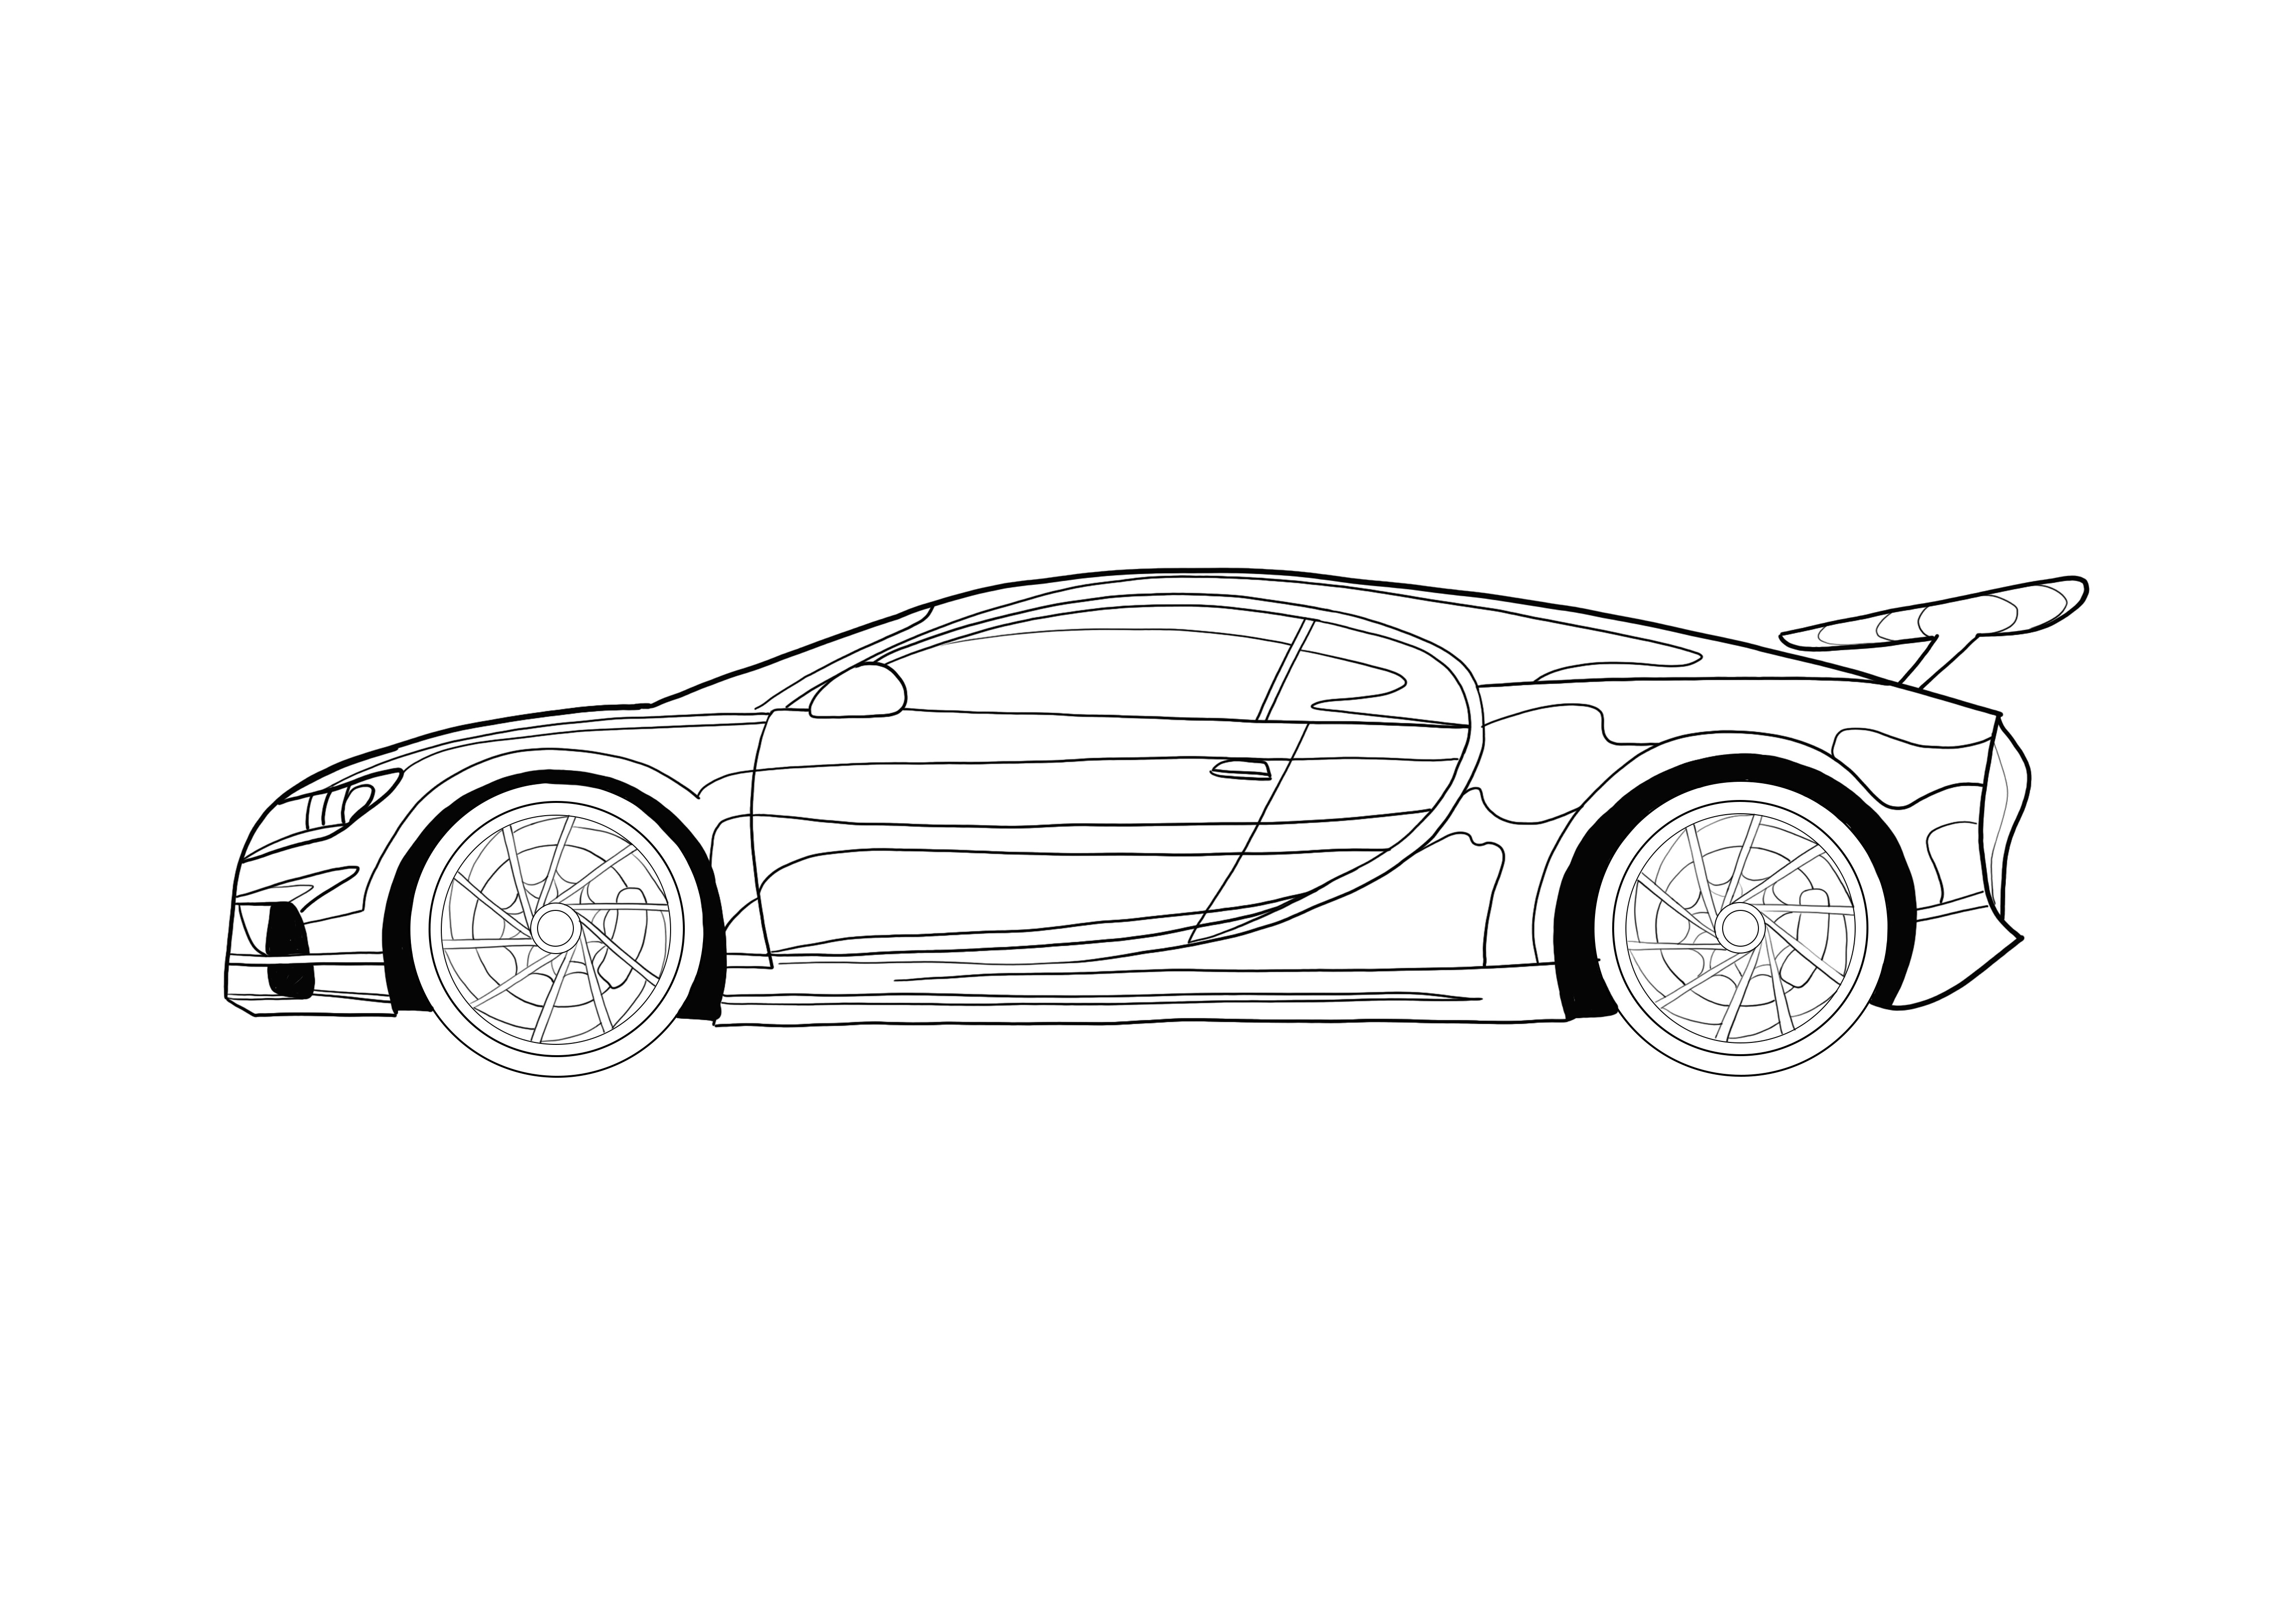 Desenho legal de Bugatti para colorir